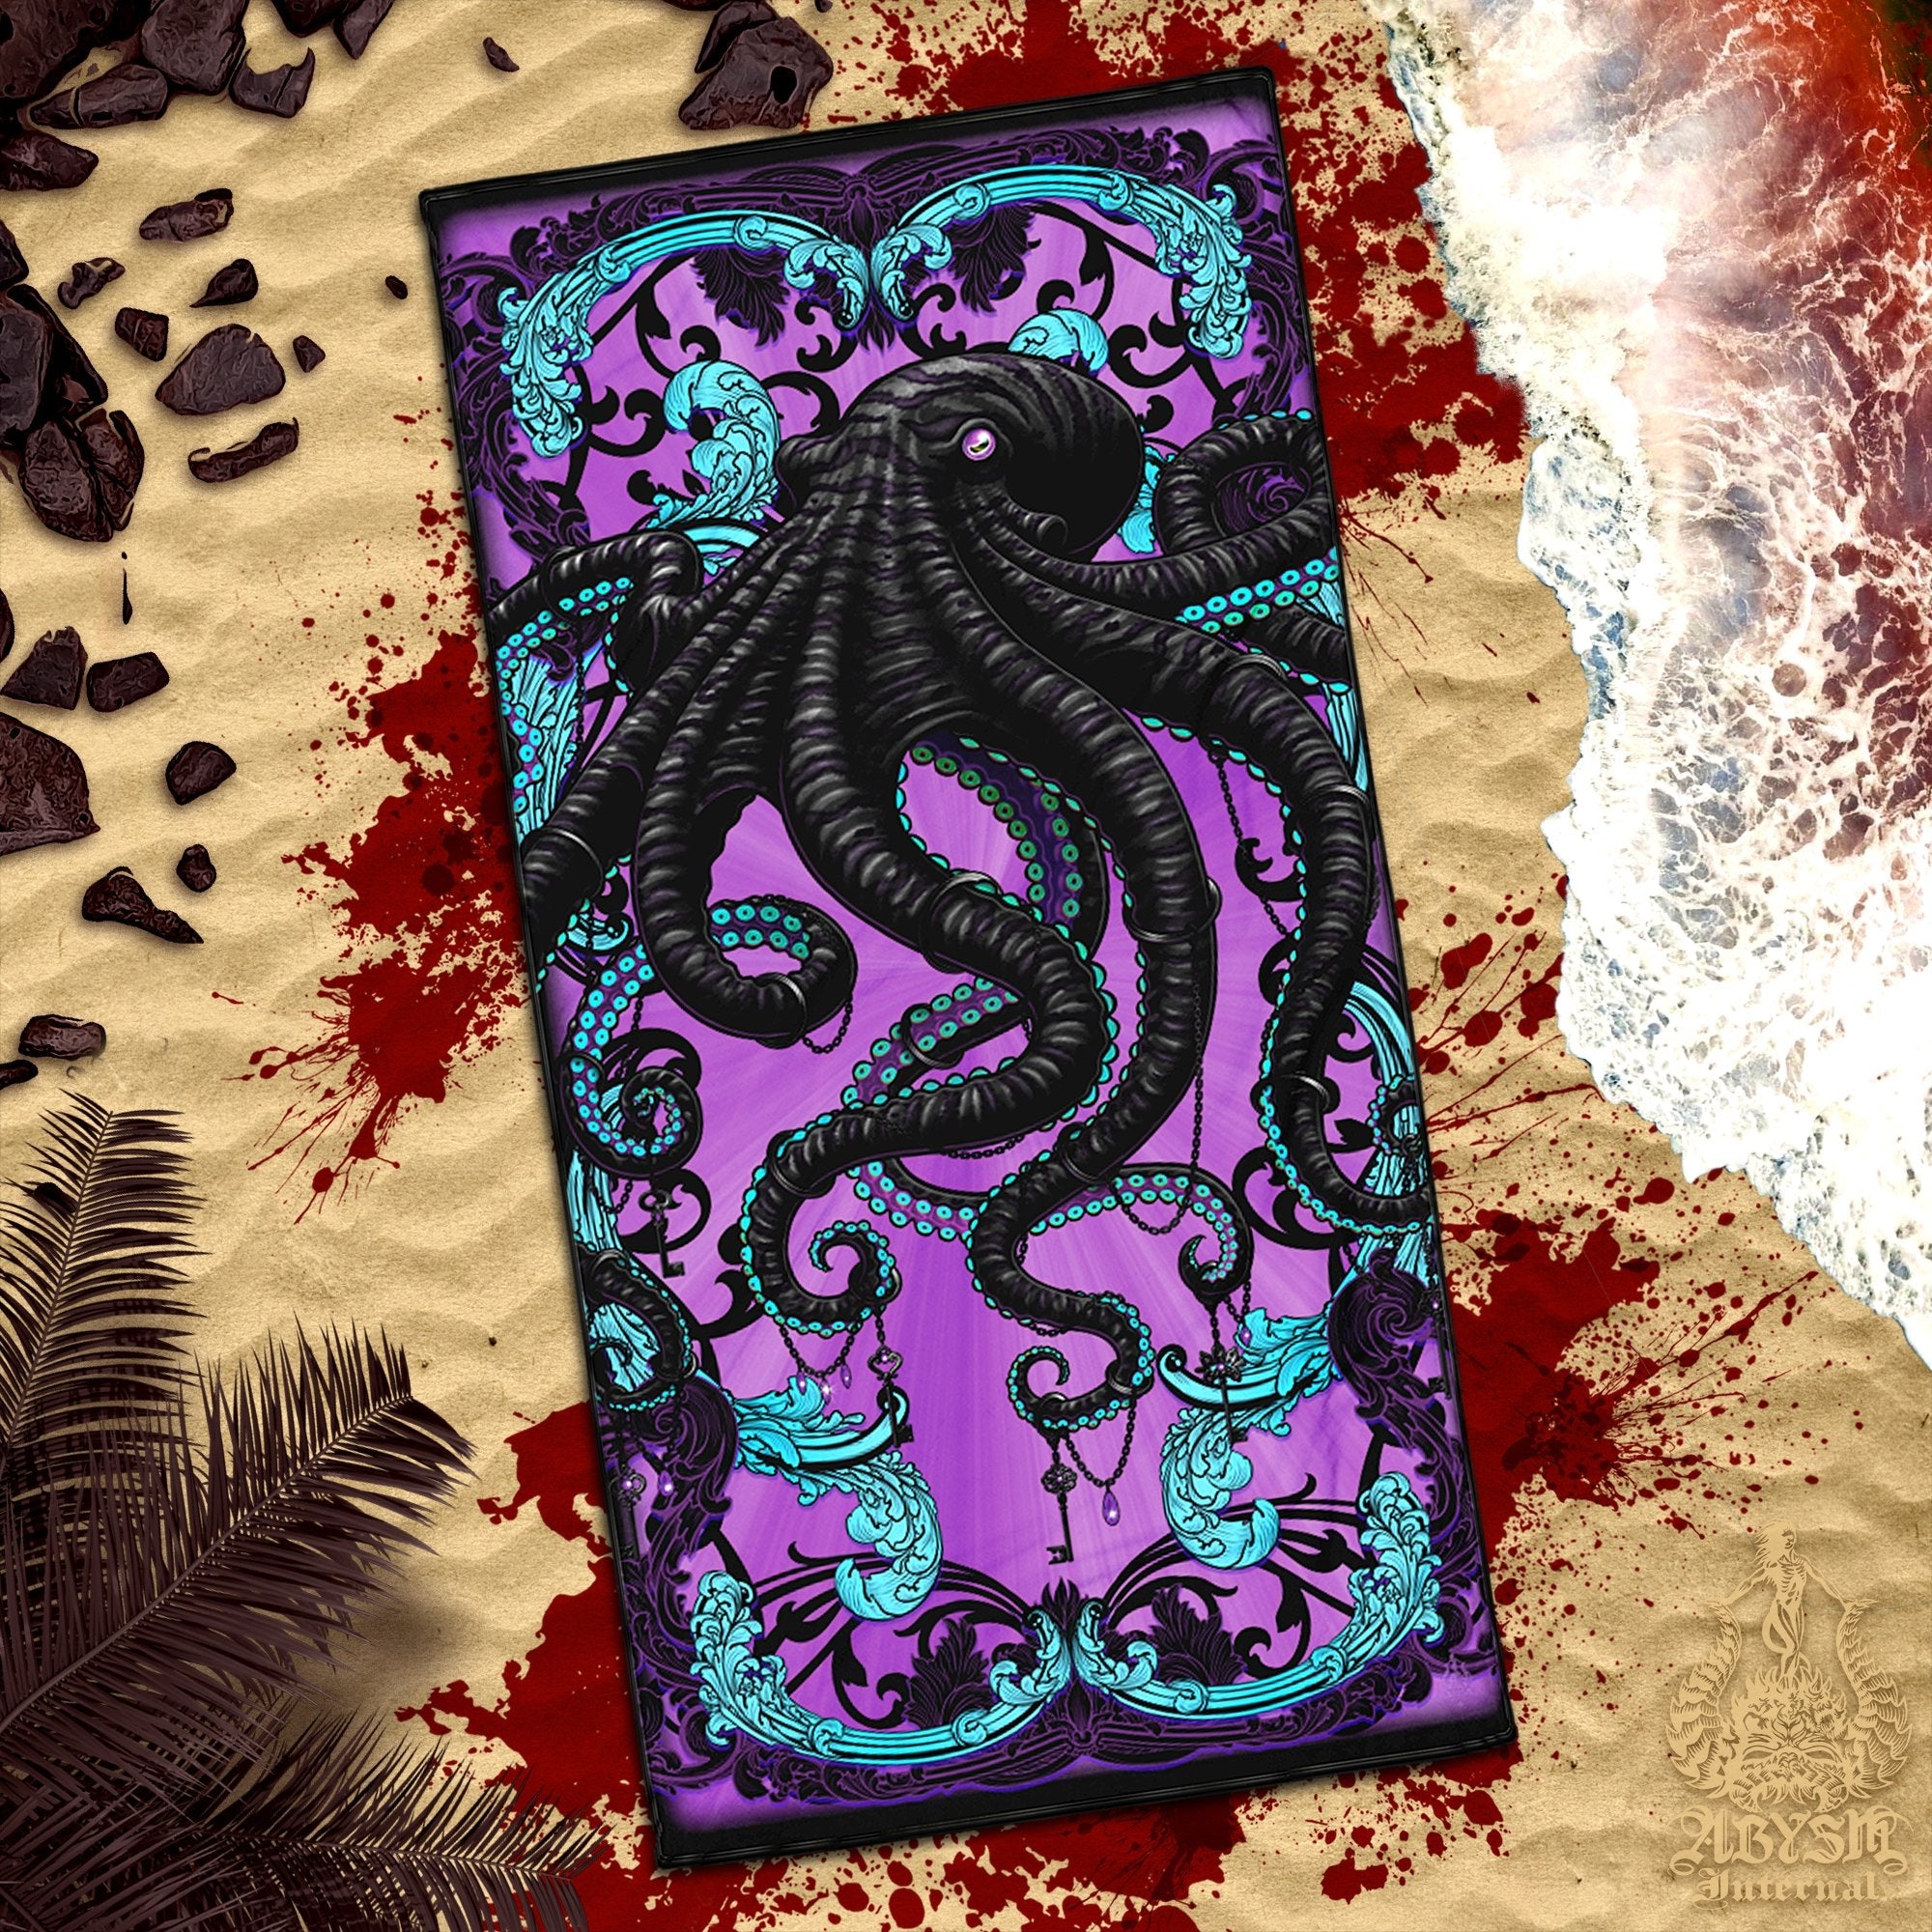 ALL Pastel Goth Beach Towel Designs, Black Purple Whimsigoth Art, Cool Gift Idea for Surfers - Octopus, Ankh, Lion, Kitsune, Medusa, Music Dragon, Oni, Spider, Skull, Daruma, Viking, Tree of Life, 13 Designs - Abysm Internal